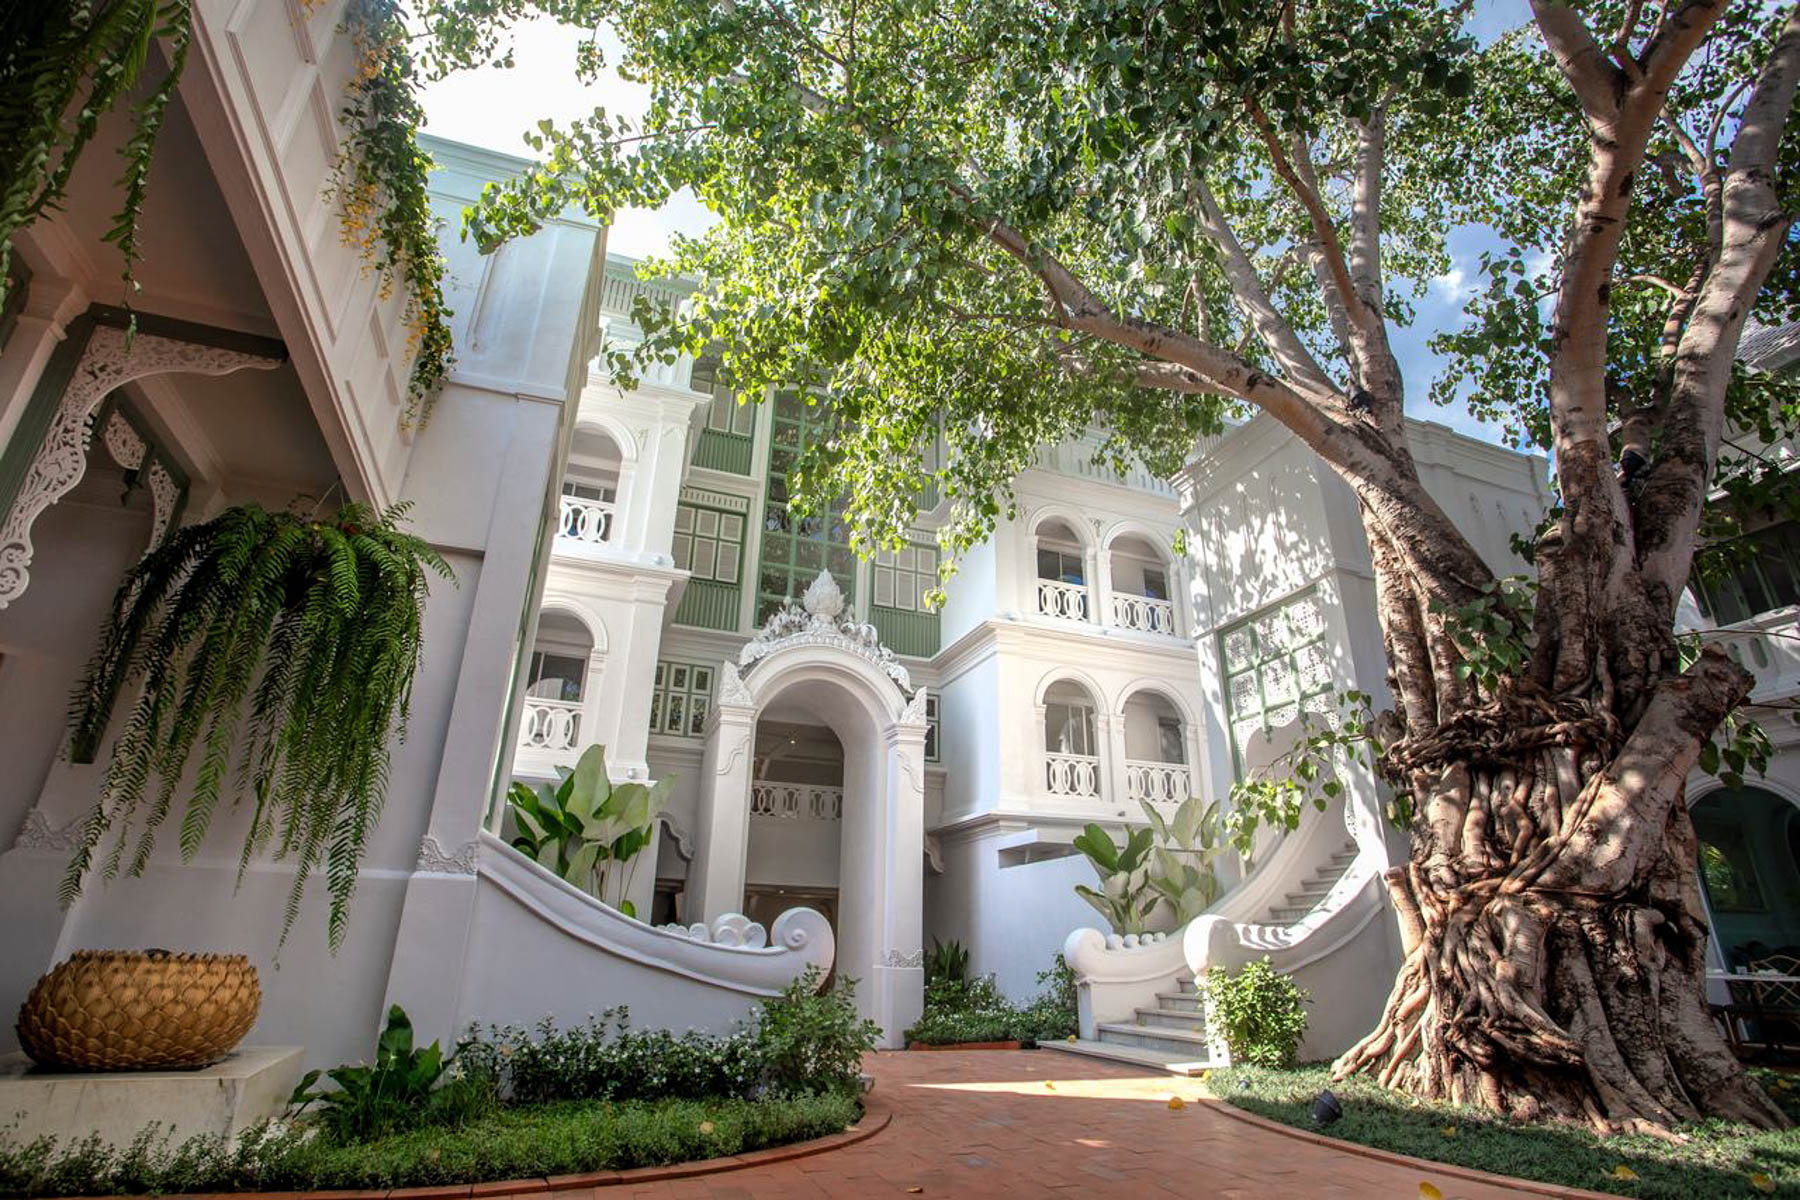 Honeymoon Hotel in Chiang Mai: The Inside House